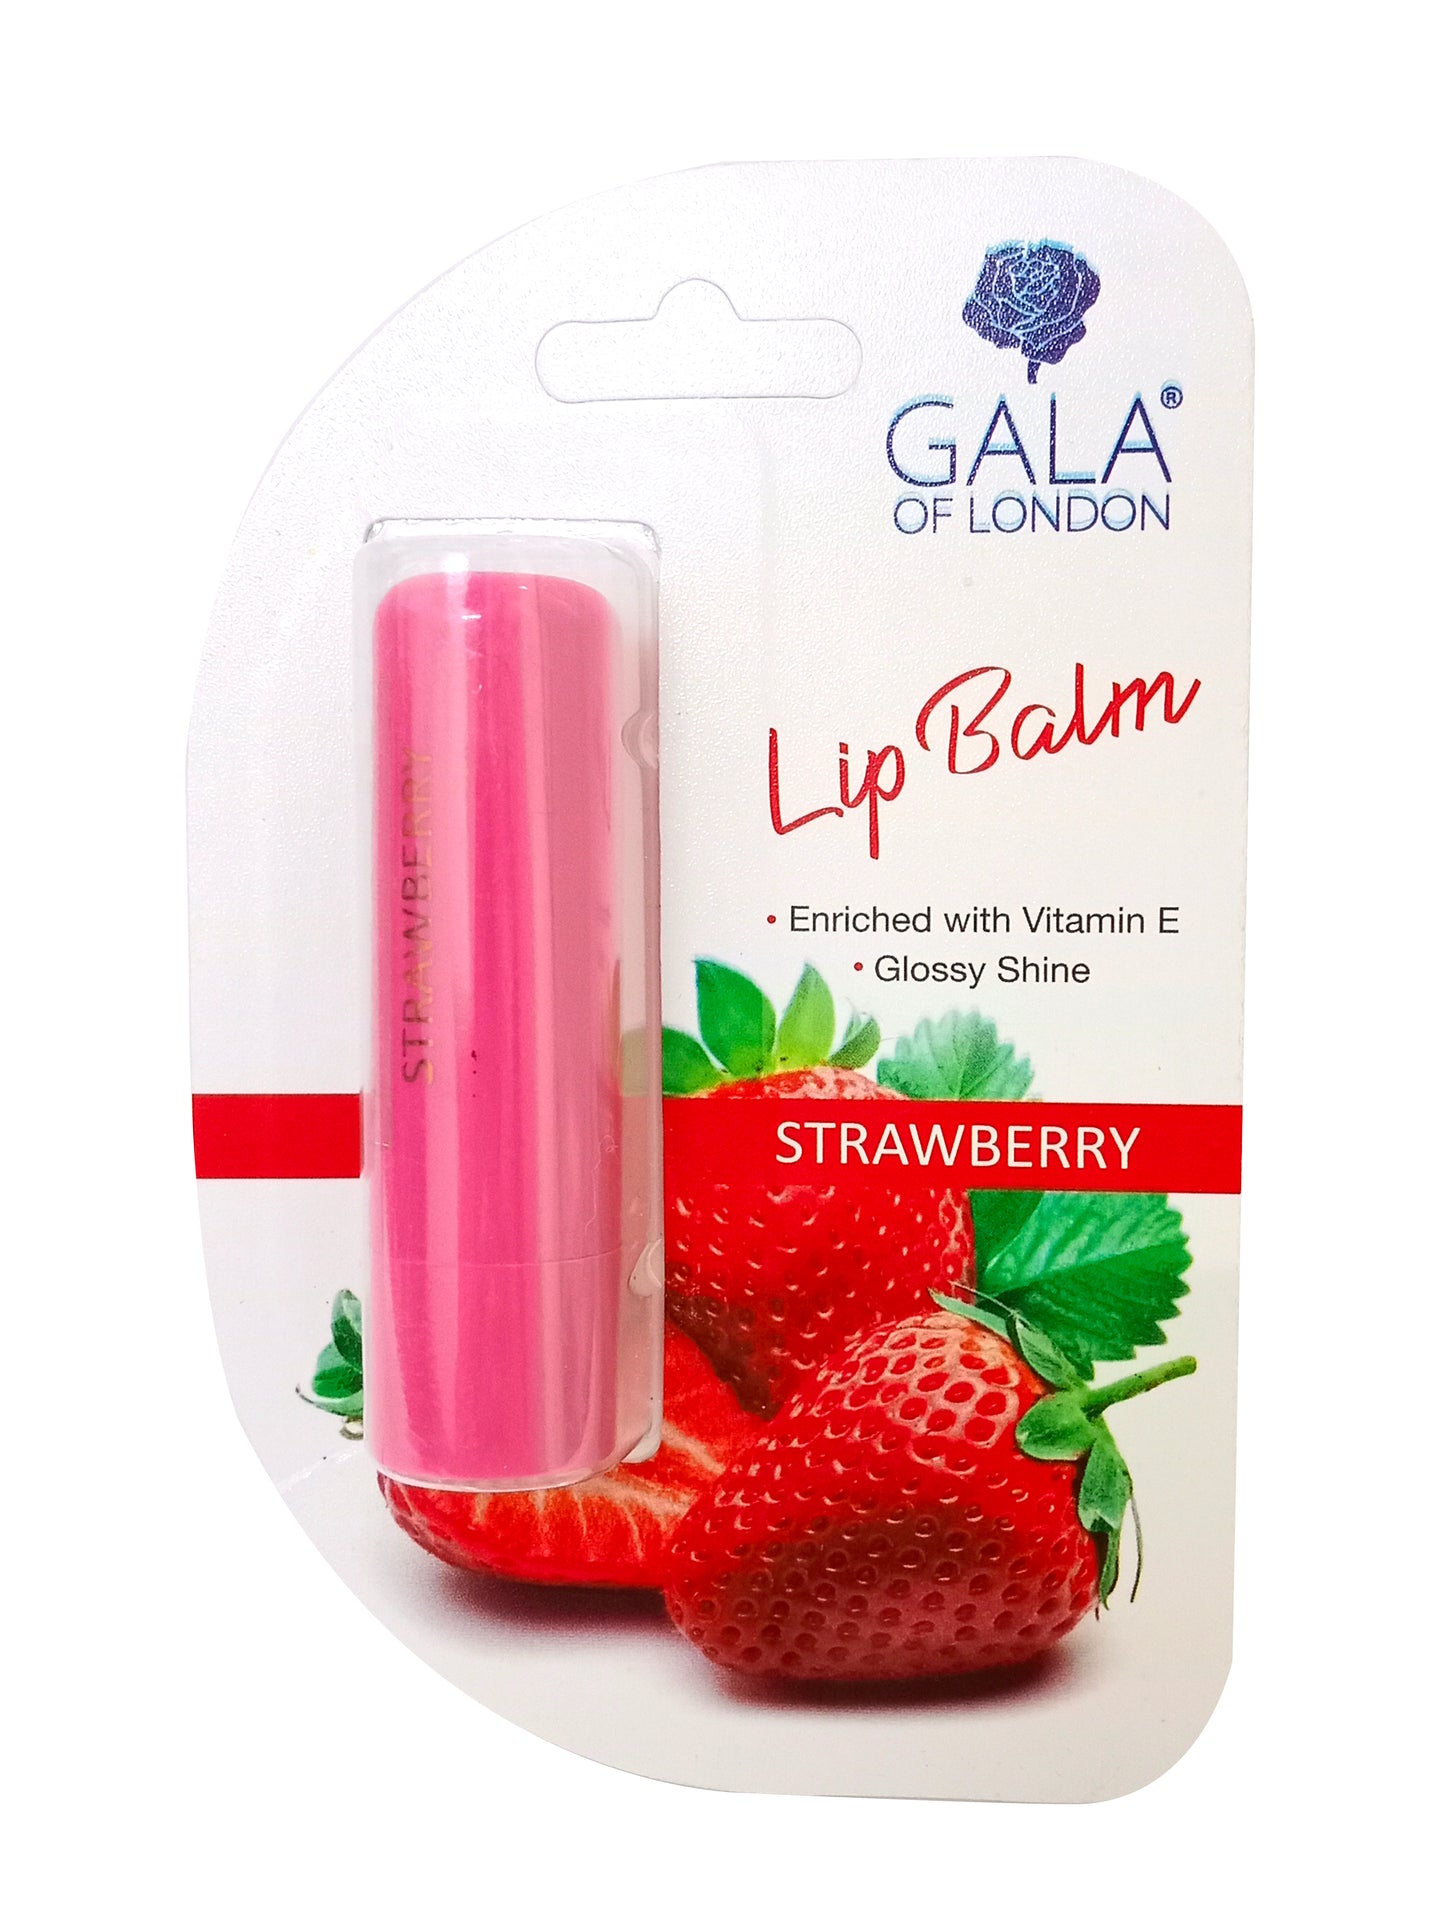 Gala of London Lip Balm - Strawberry (Enriched with Vitamin E, Glossy Shine)